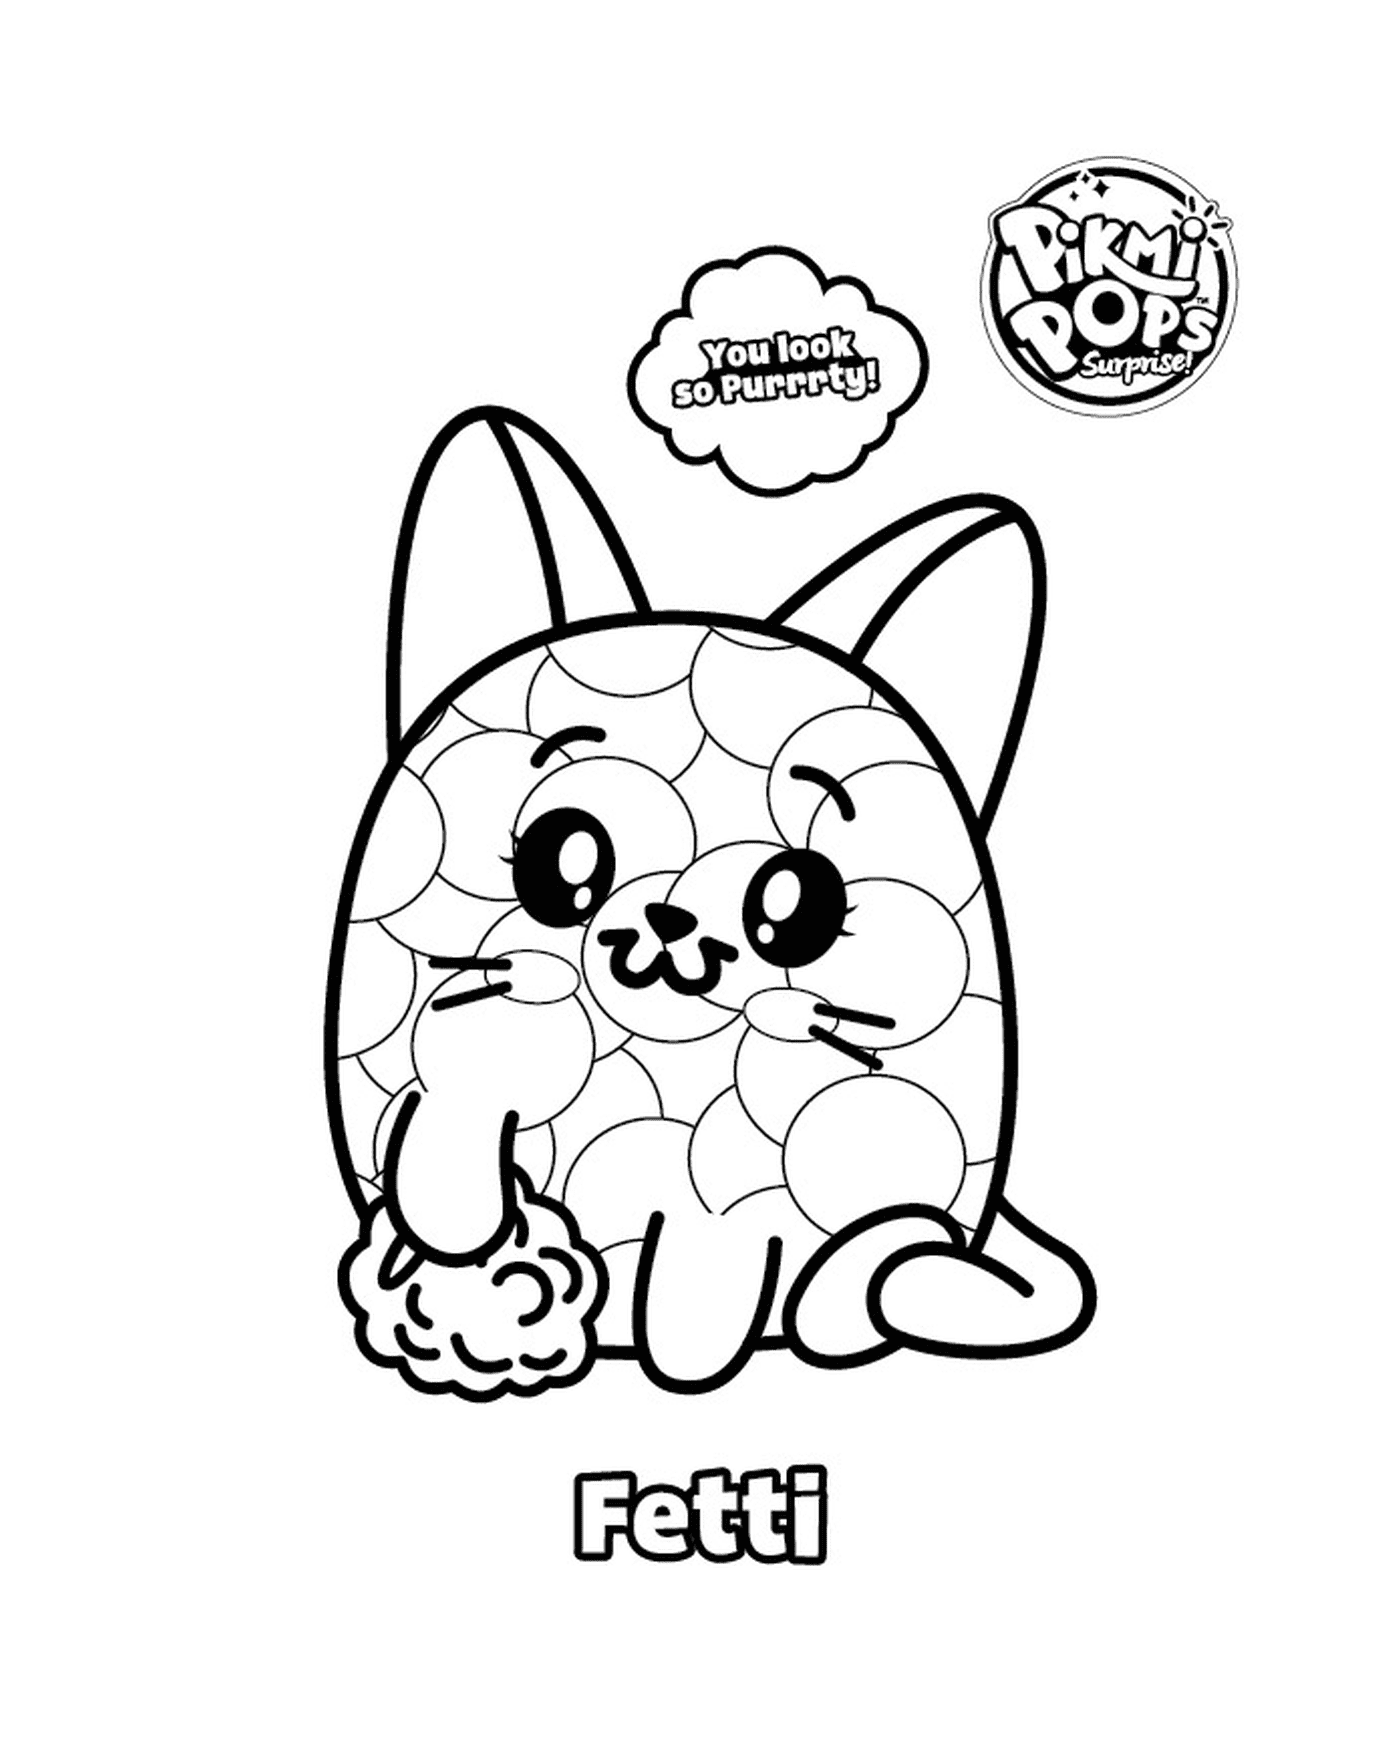  Pikmi Pop mit einer Katze namens Fetti 